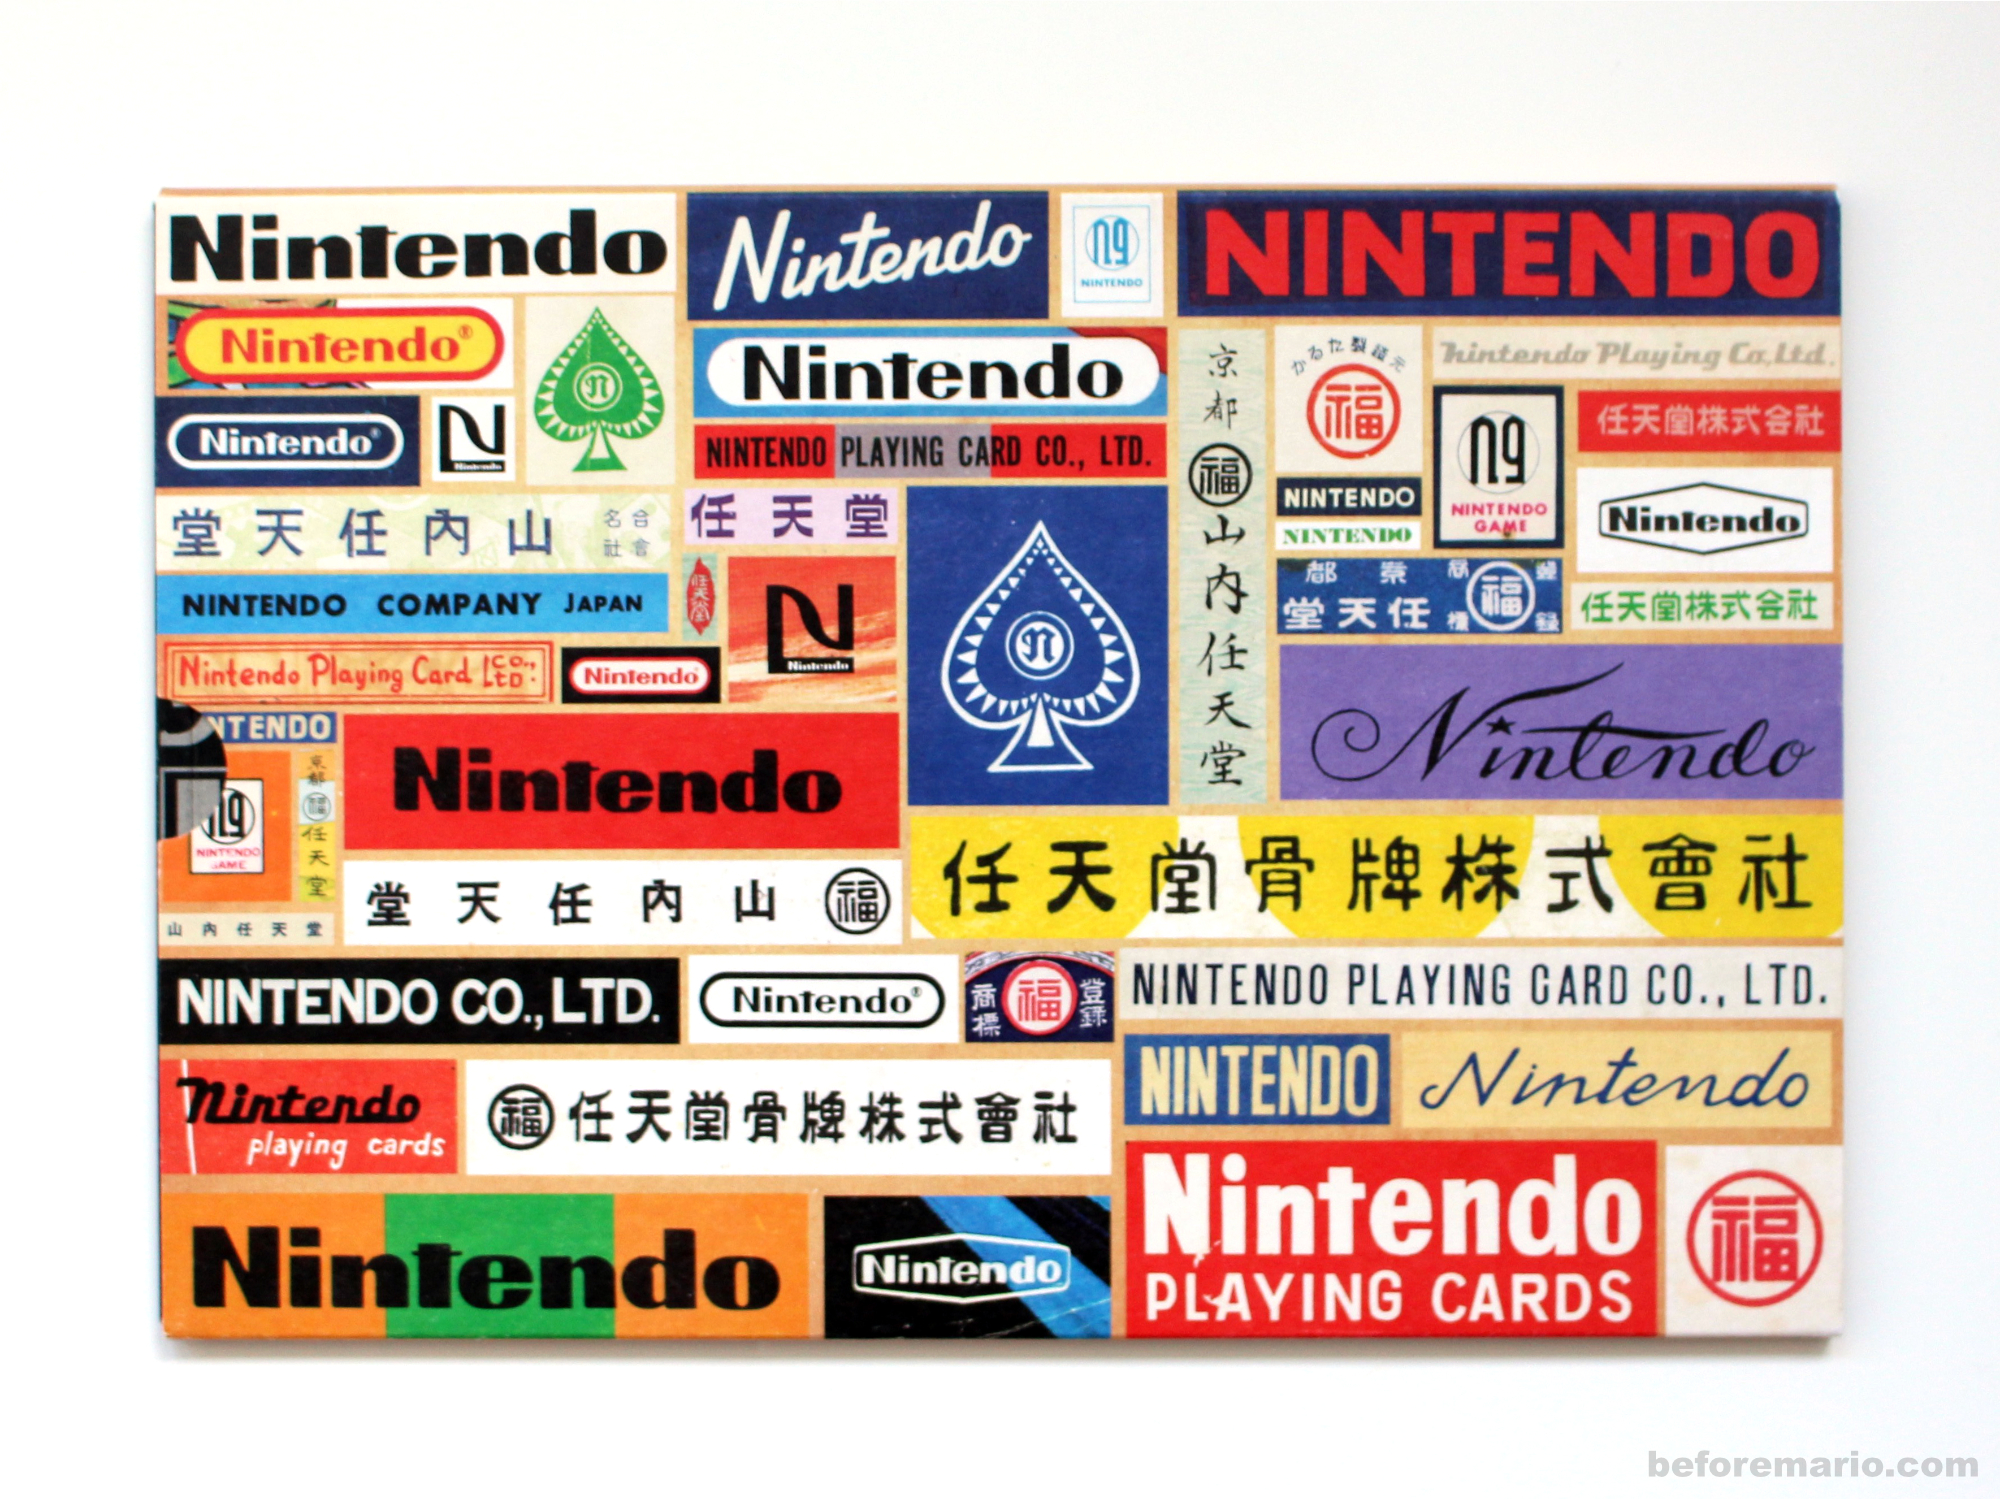 beforemario: Nintendo company overview